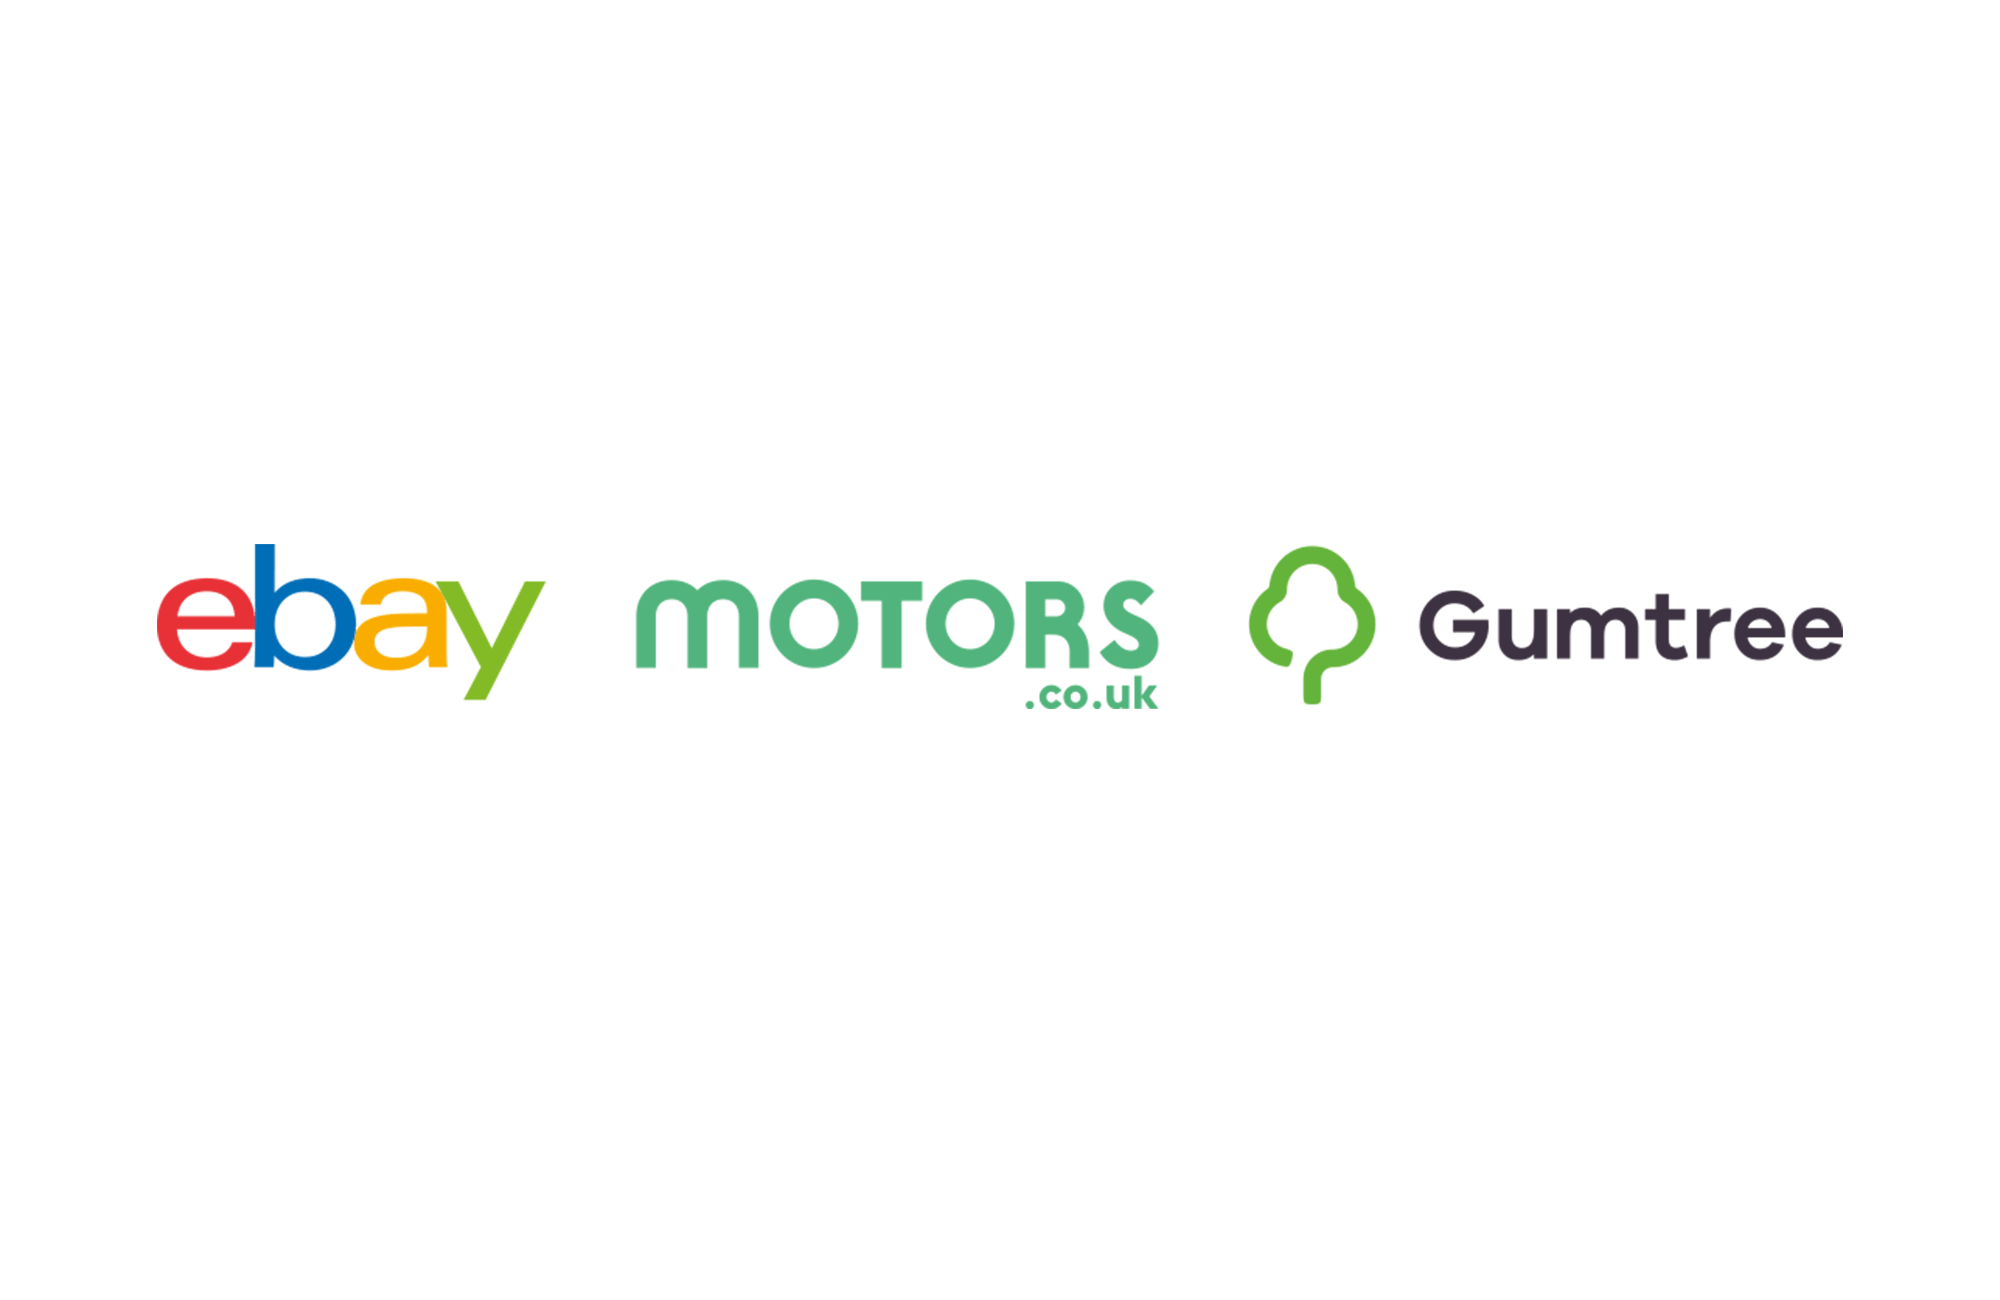 eBay Motors Logo - Motors.co.uk acquired by eBay.co.uk